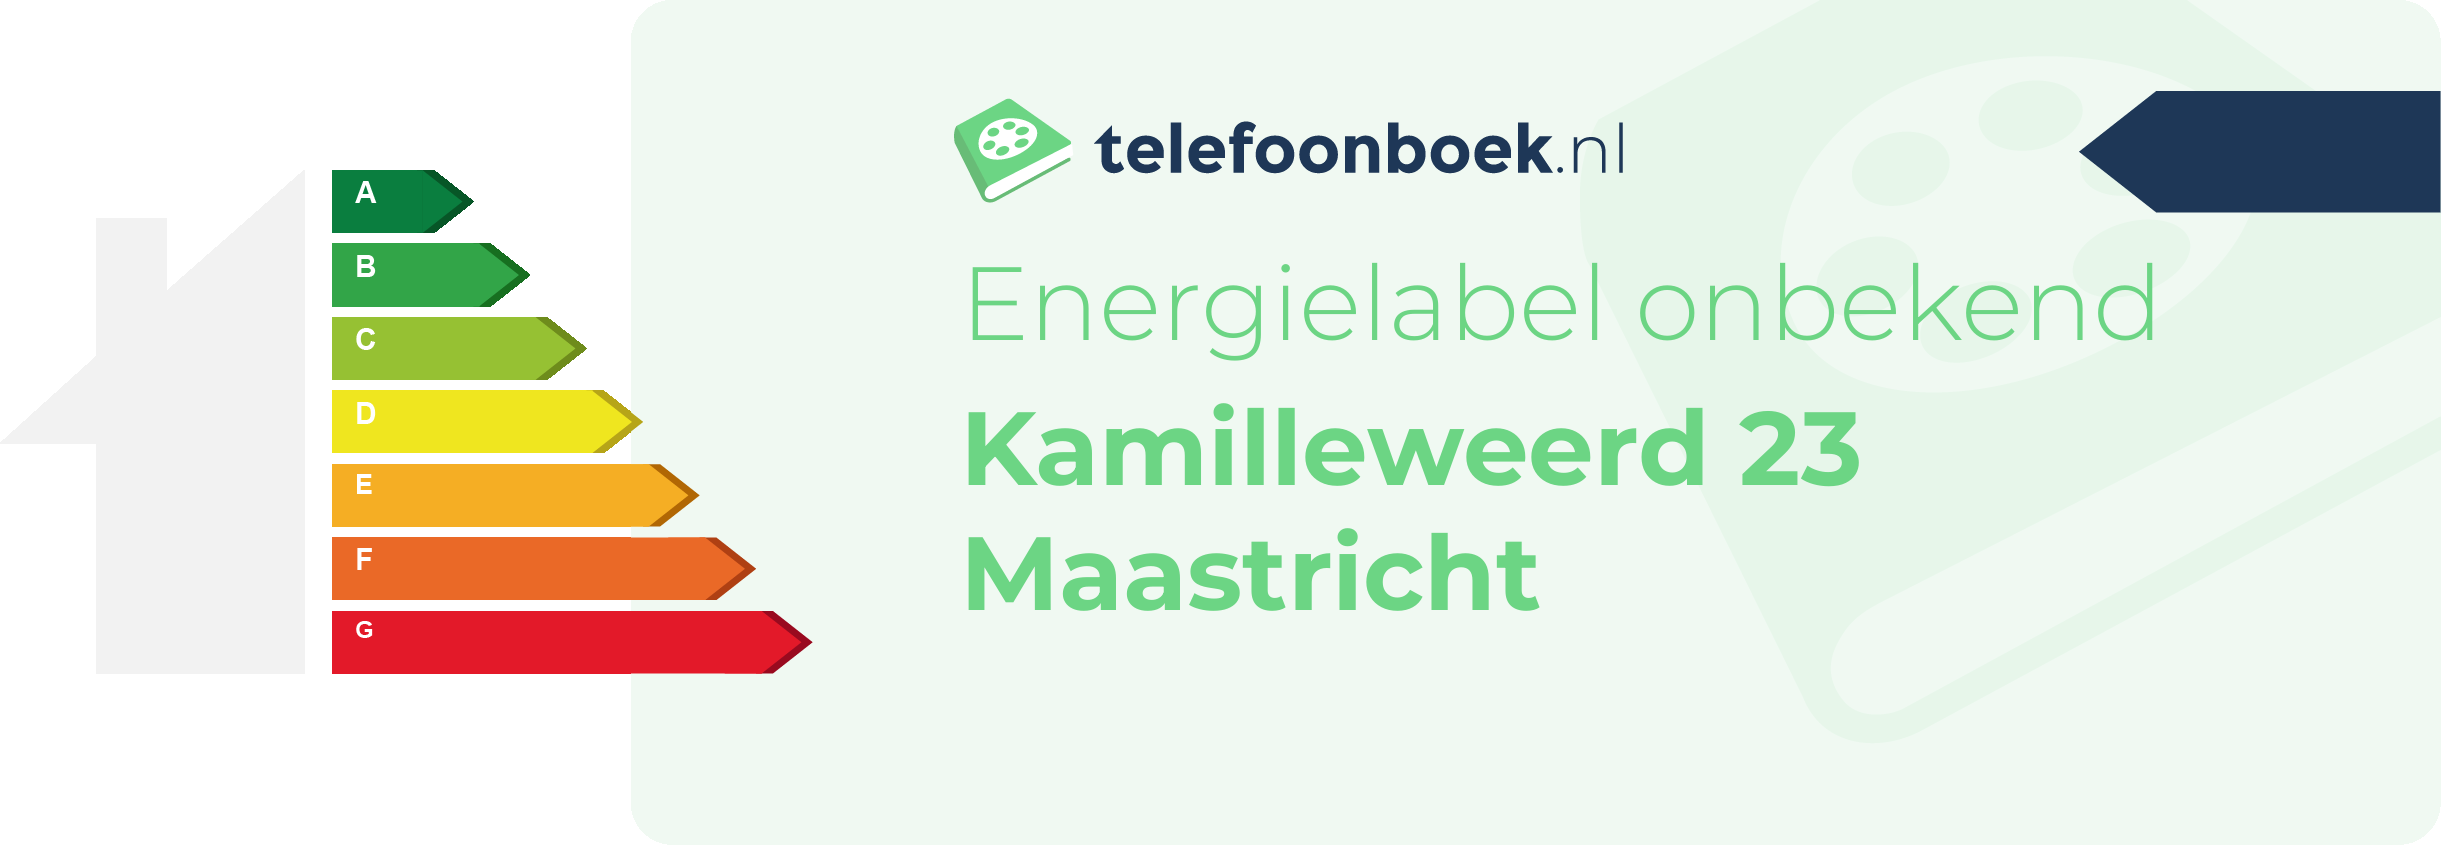 Energielabel Kamilleweerd 23 Maastricht